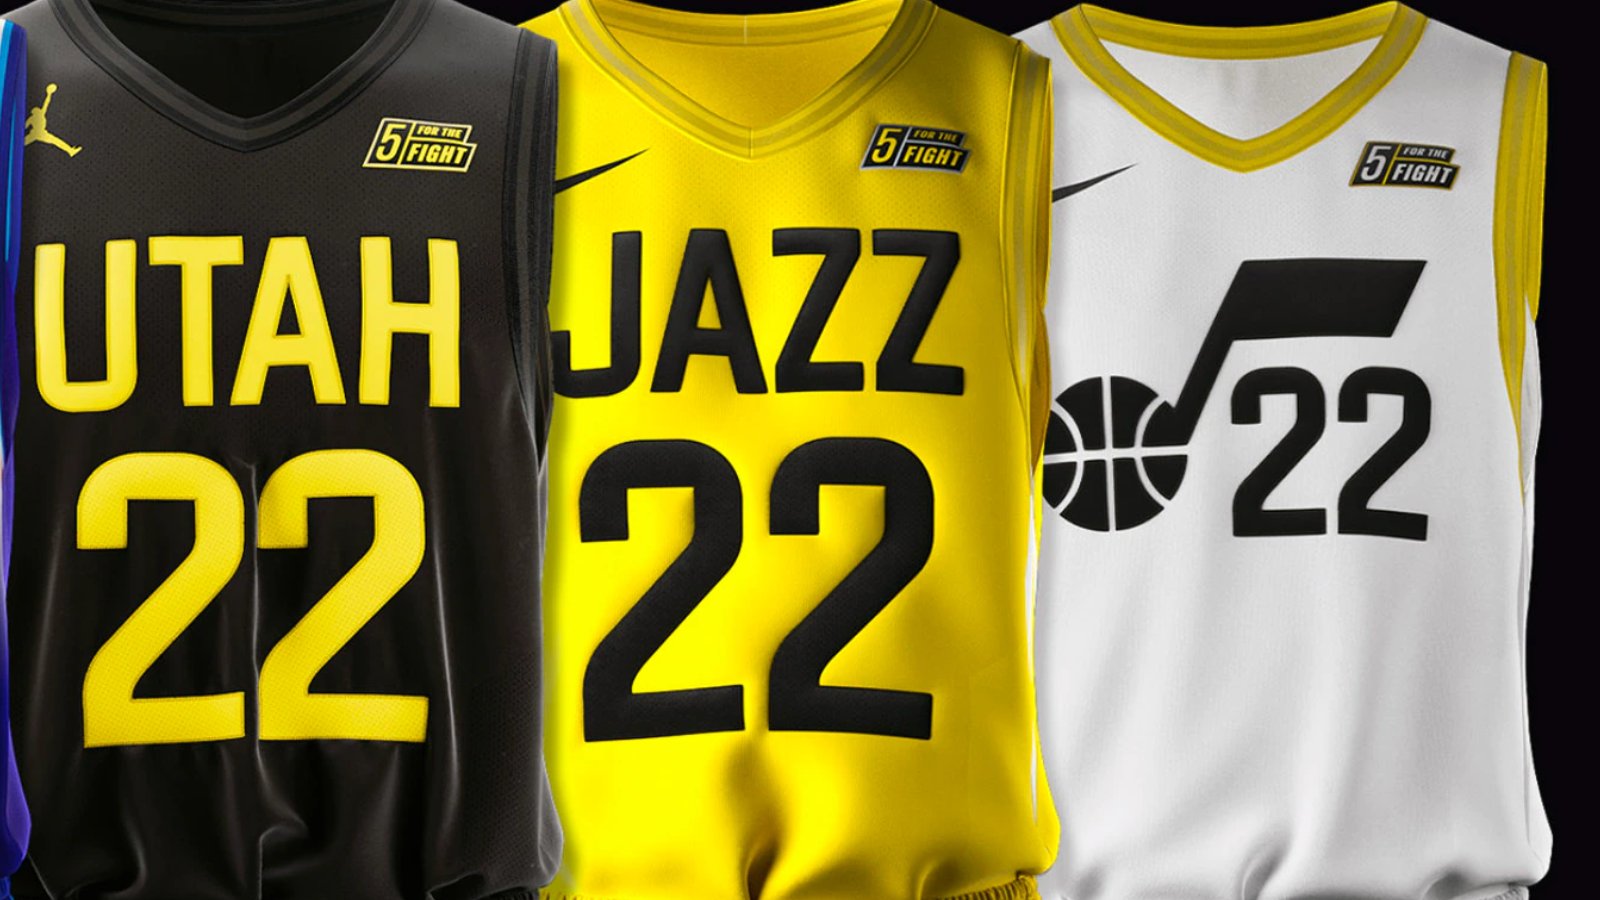 utah jazz new uniforms